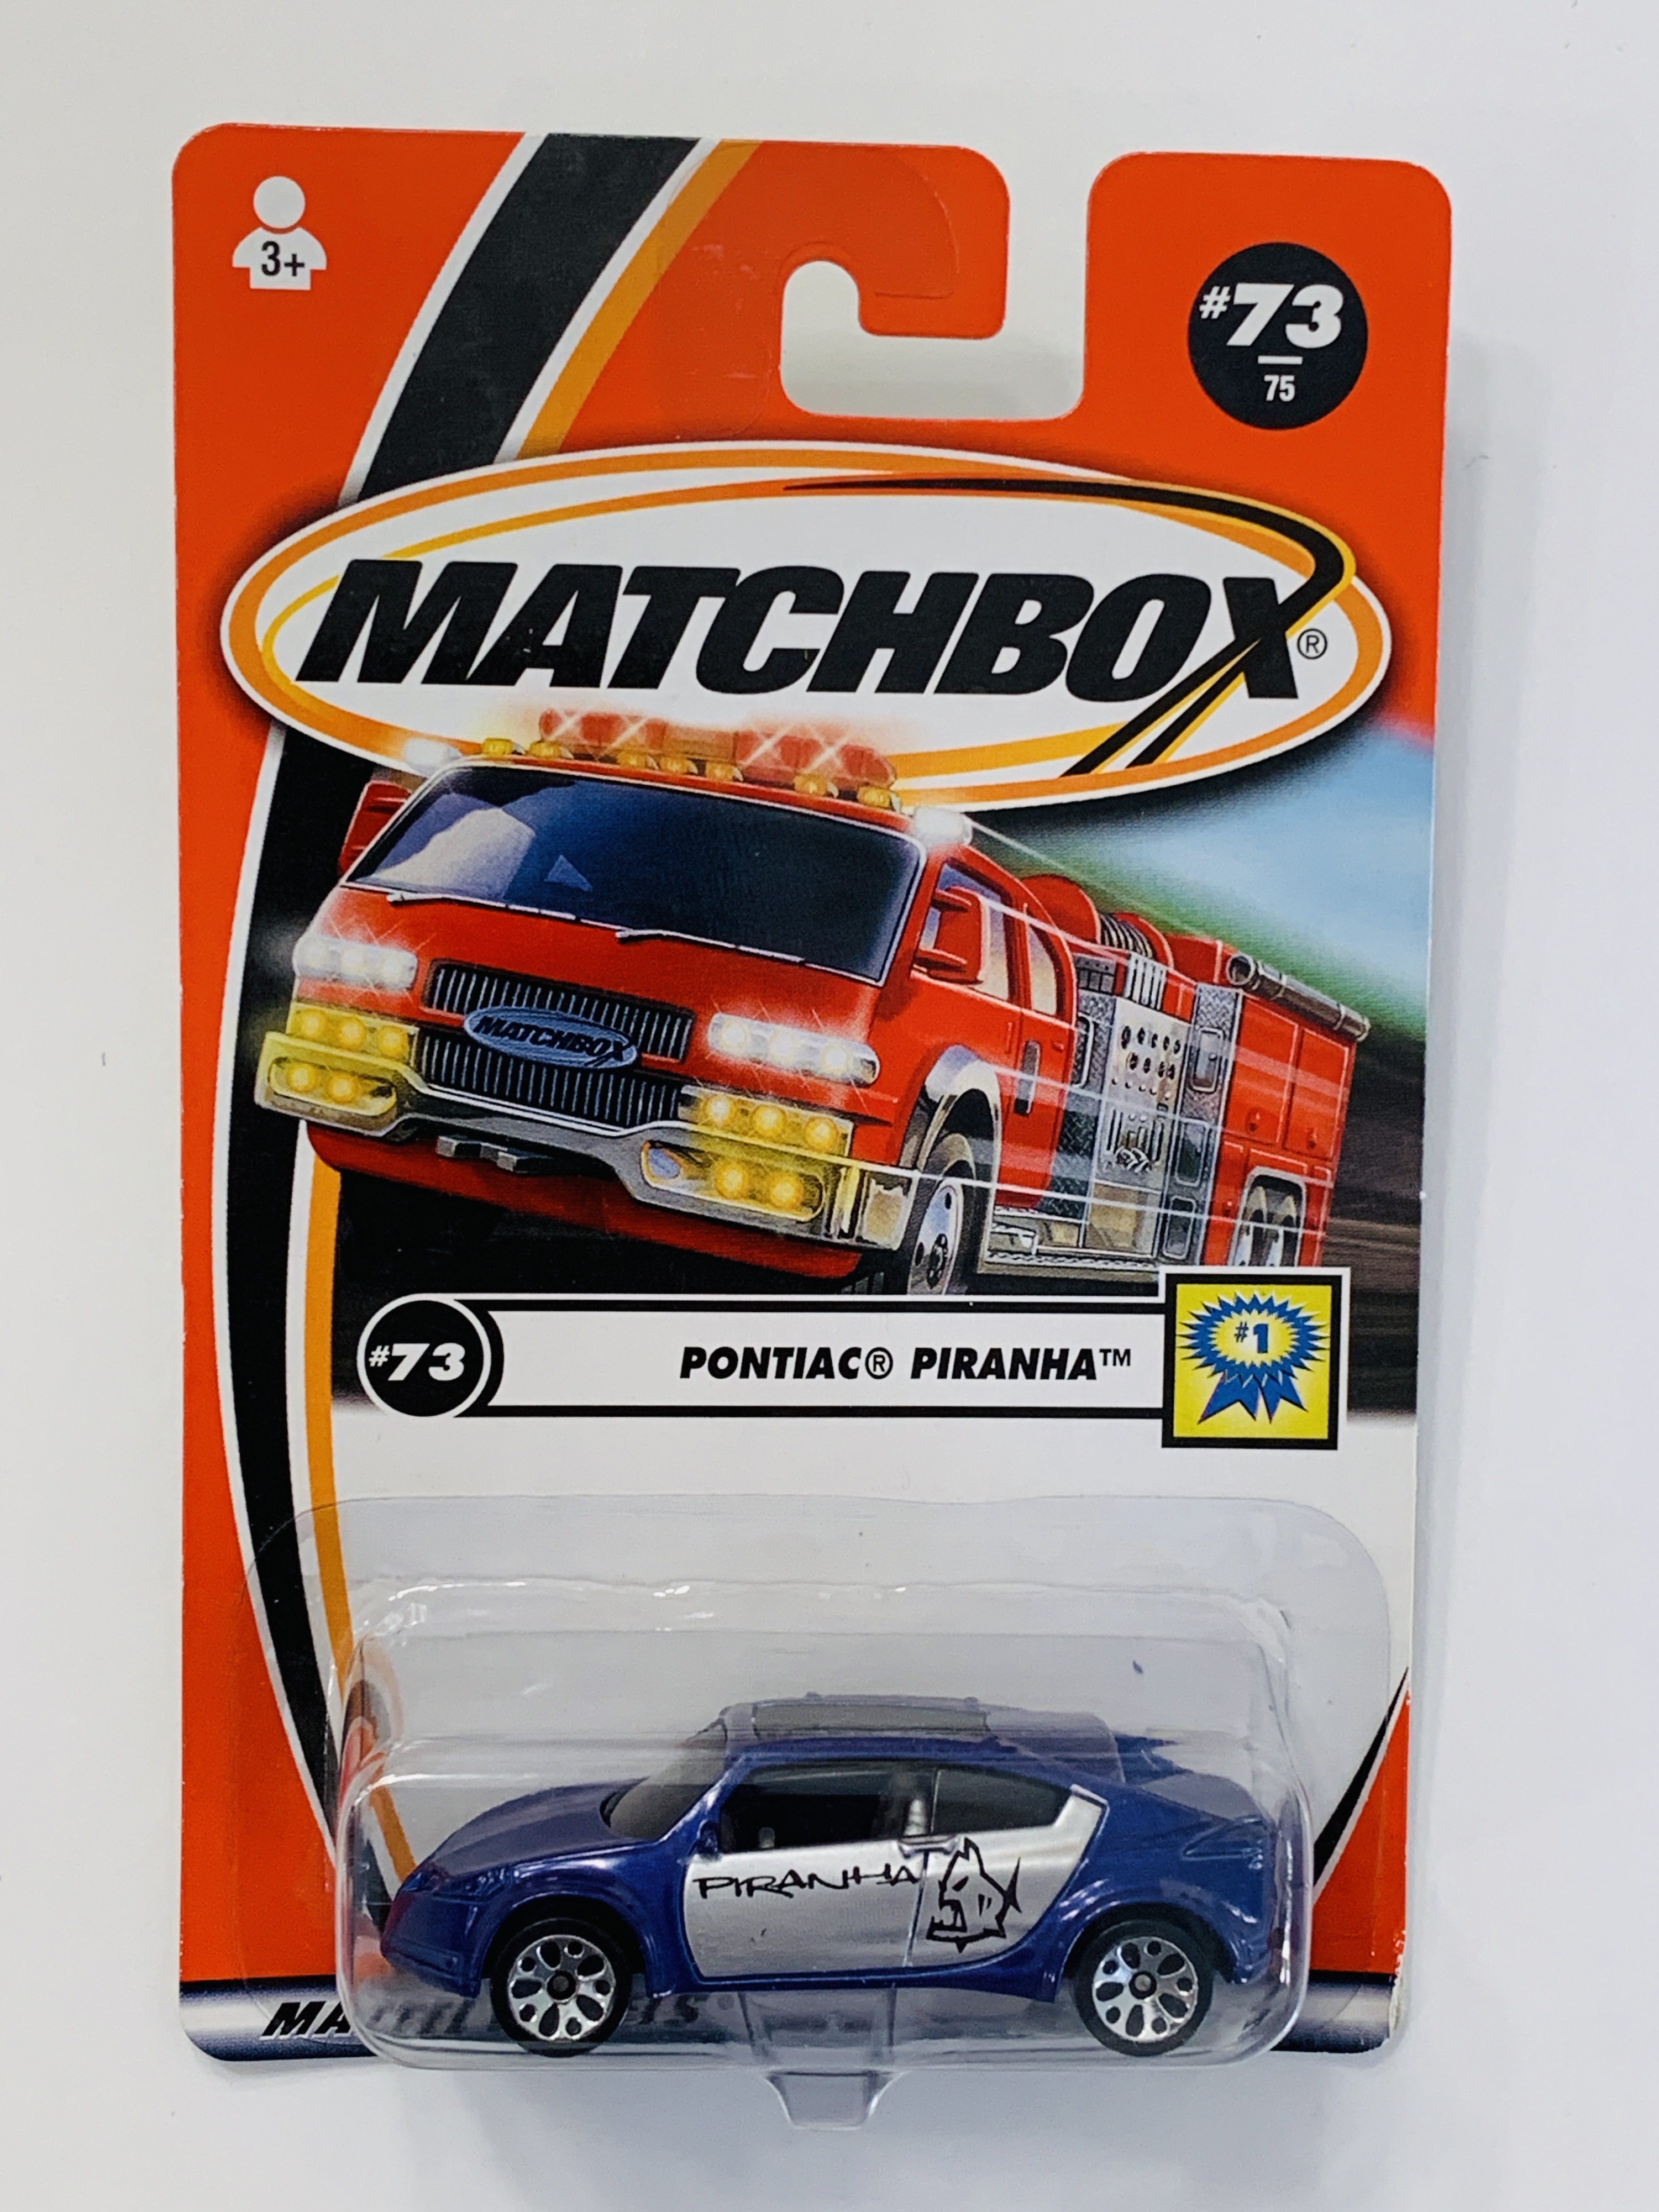 Matchbox #73 Pontiac Piranha